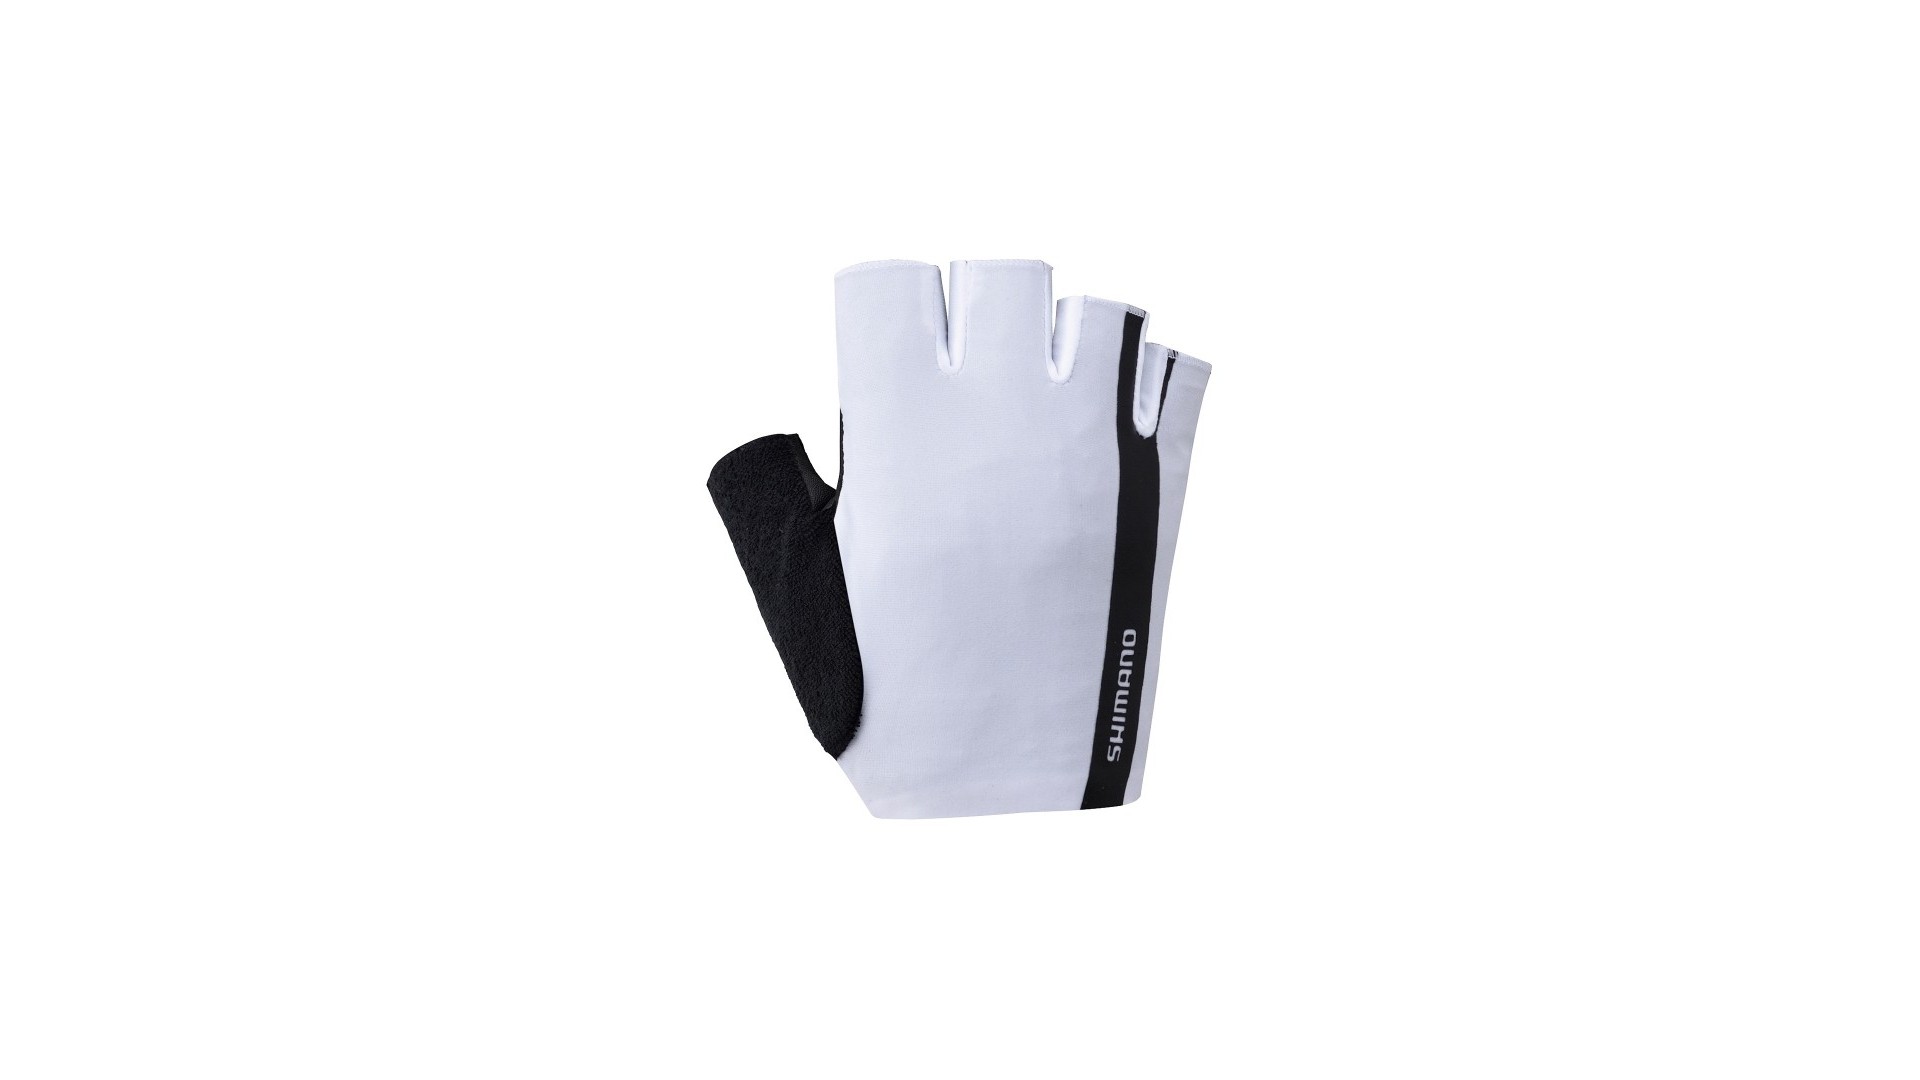 Rękawiczki Shimano Value Gloves białe r. S - CWGLBSRS51YI2